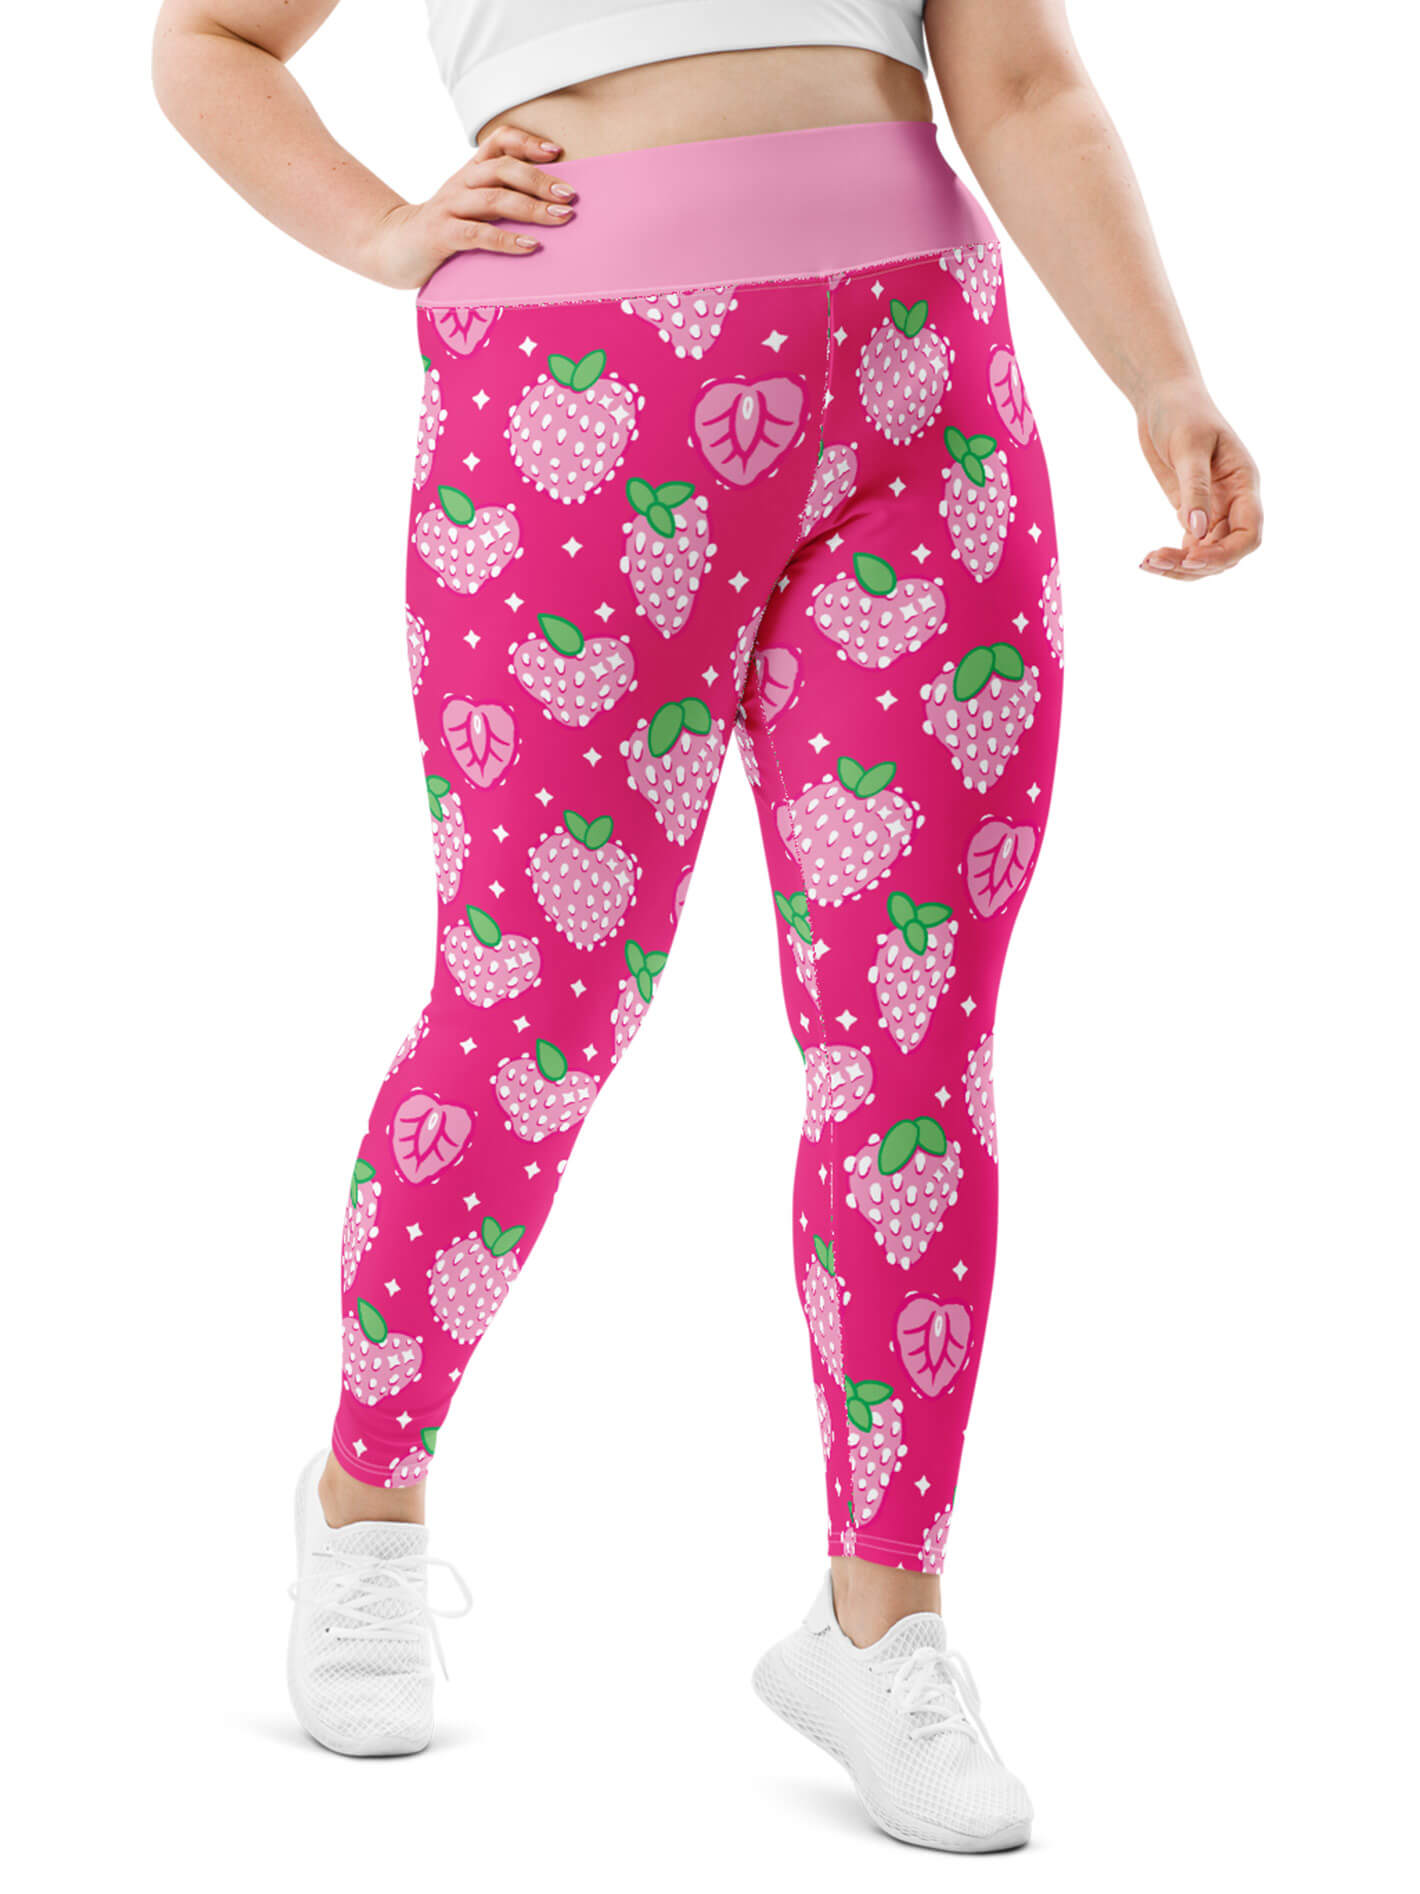 Kawaii strawberry plus size leggings.